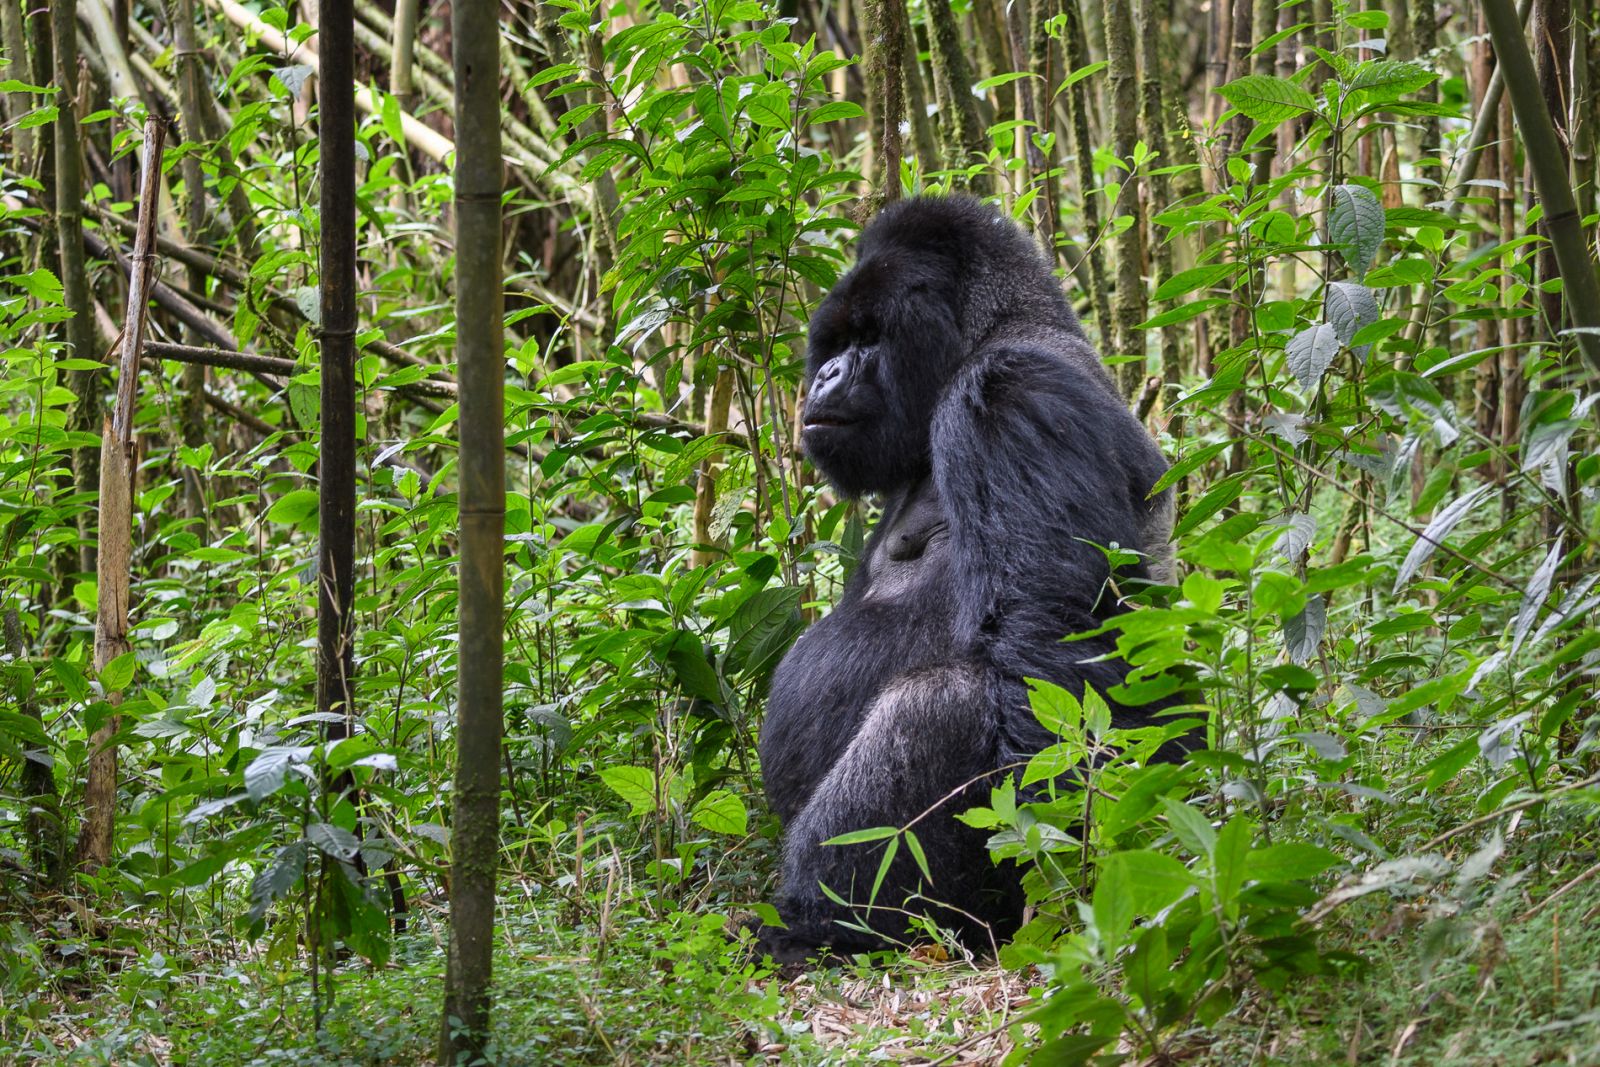 A gorilla sitting in a green leafy forest at Bisate Lodge Rwanda